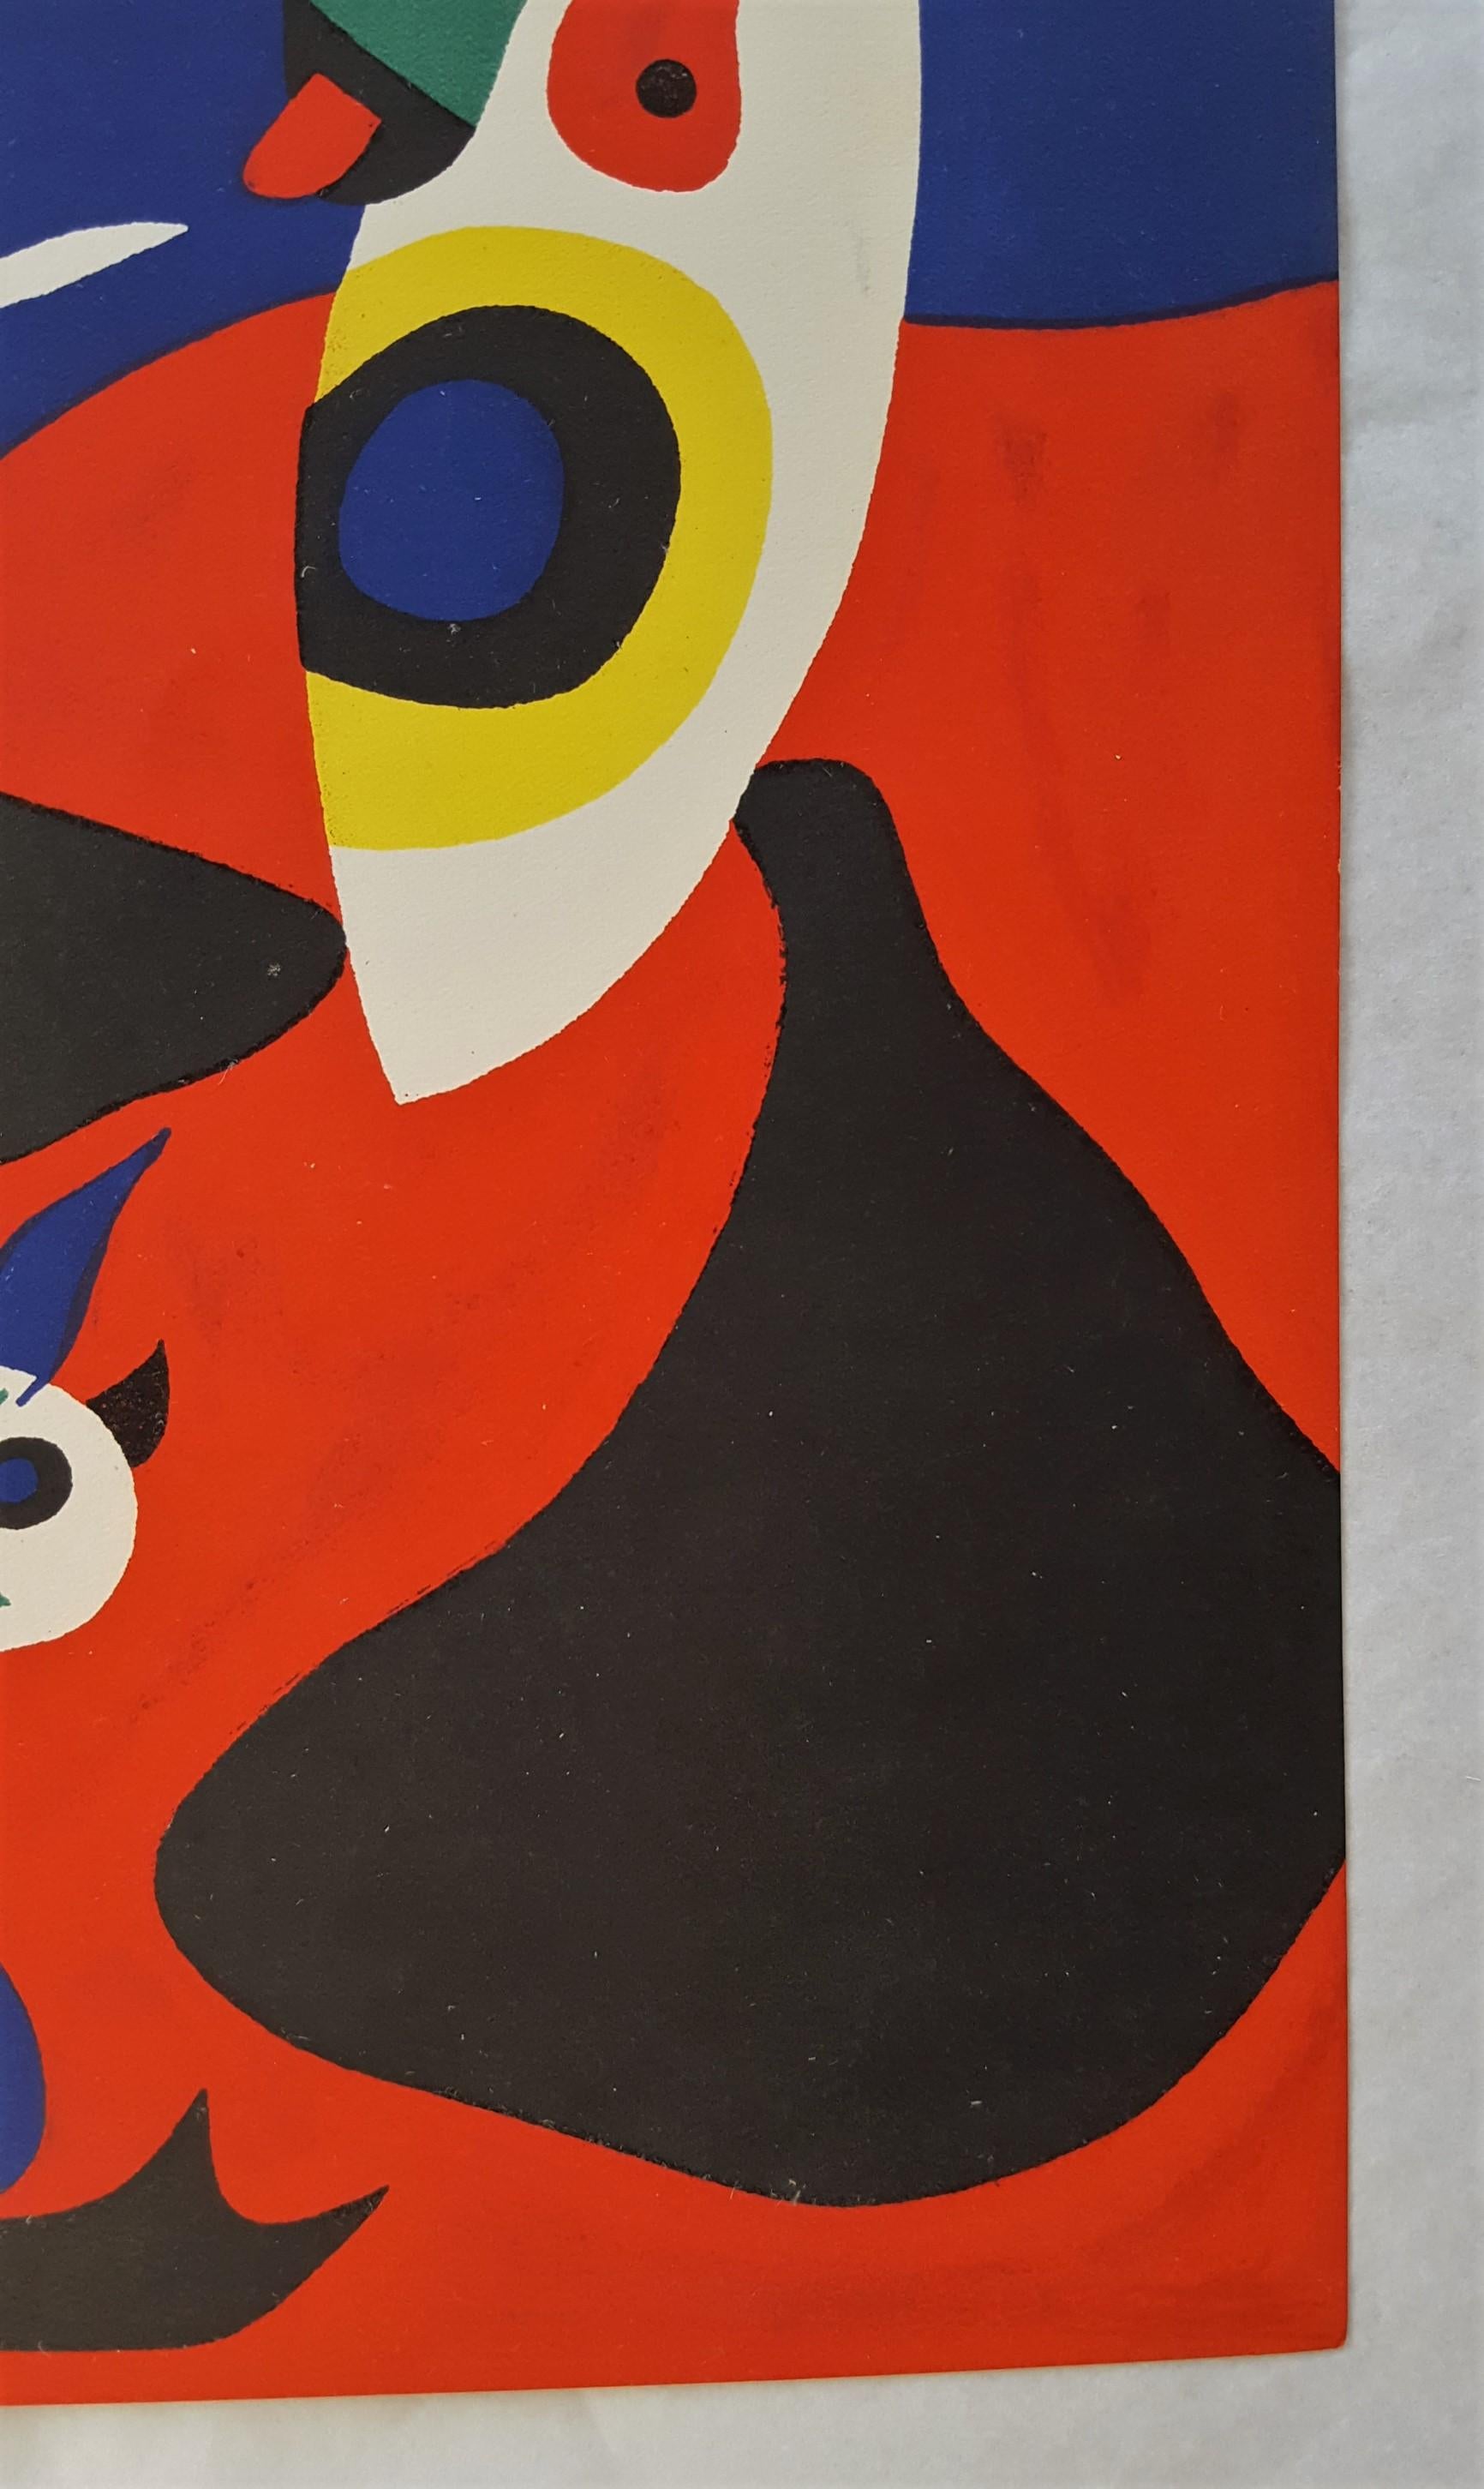 L'Ete - Orange Figurative Print by (after) Joan Miró